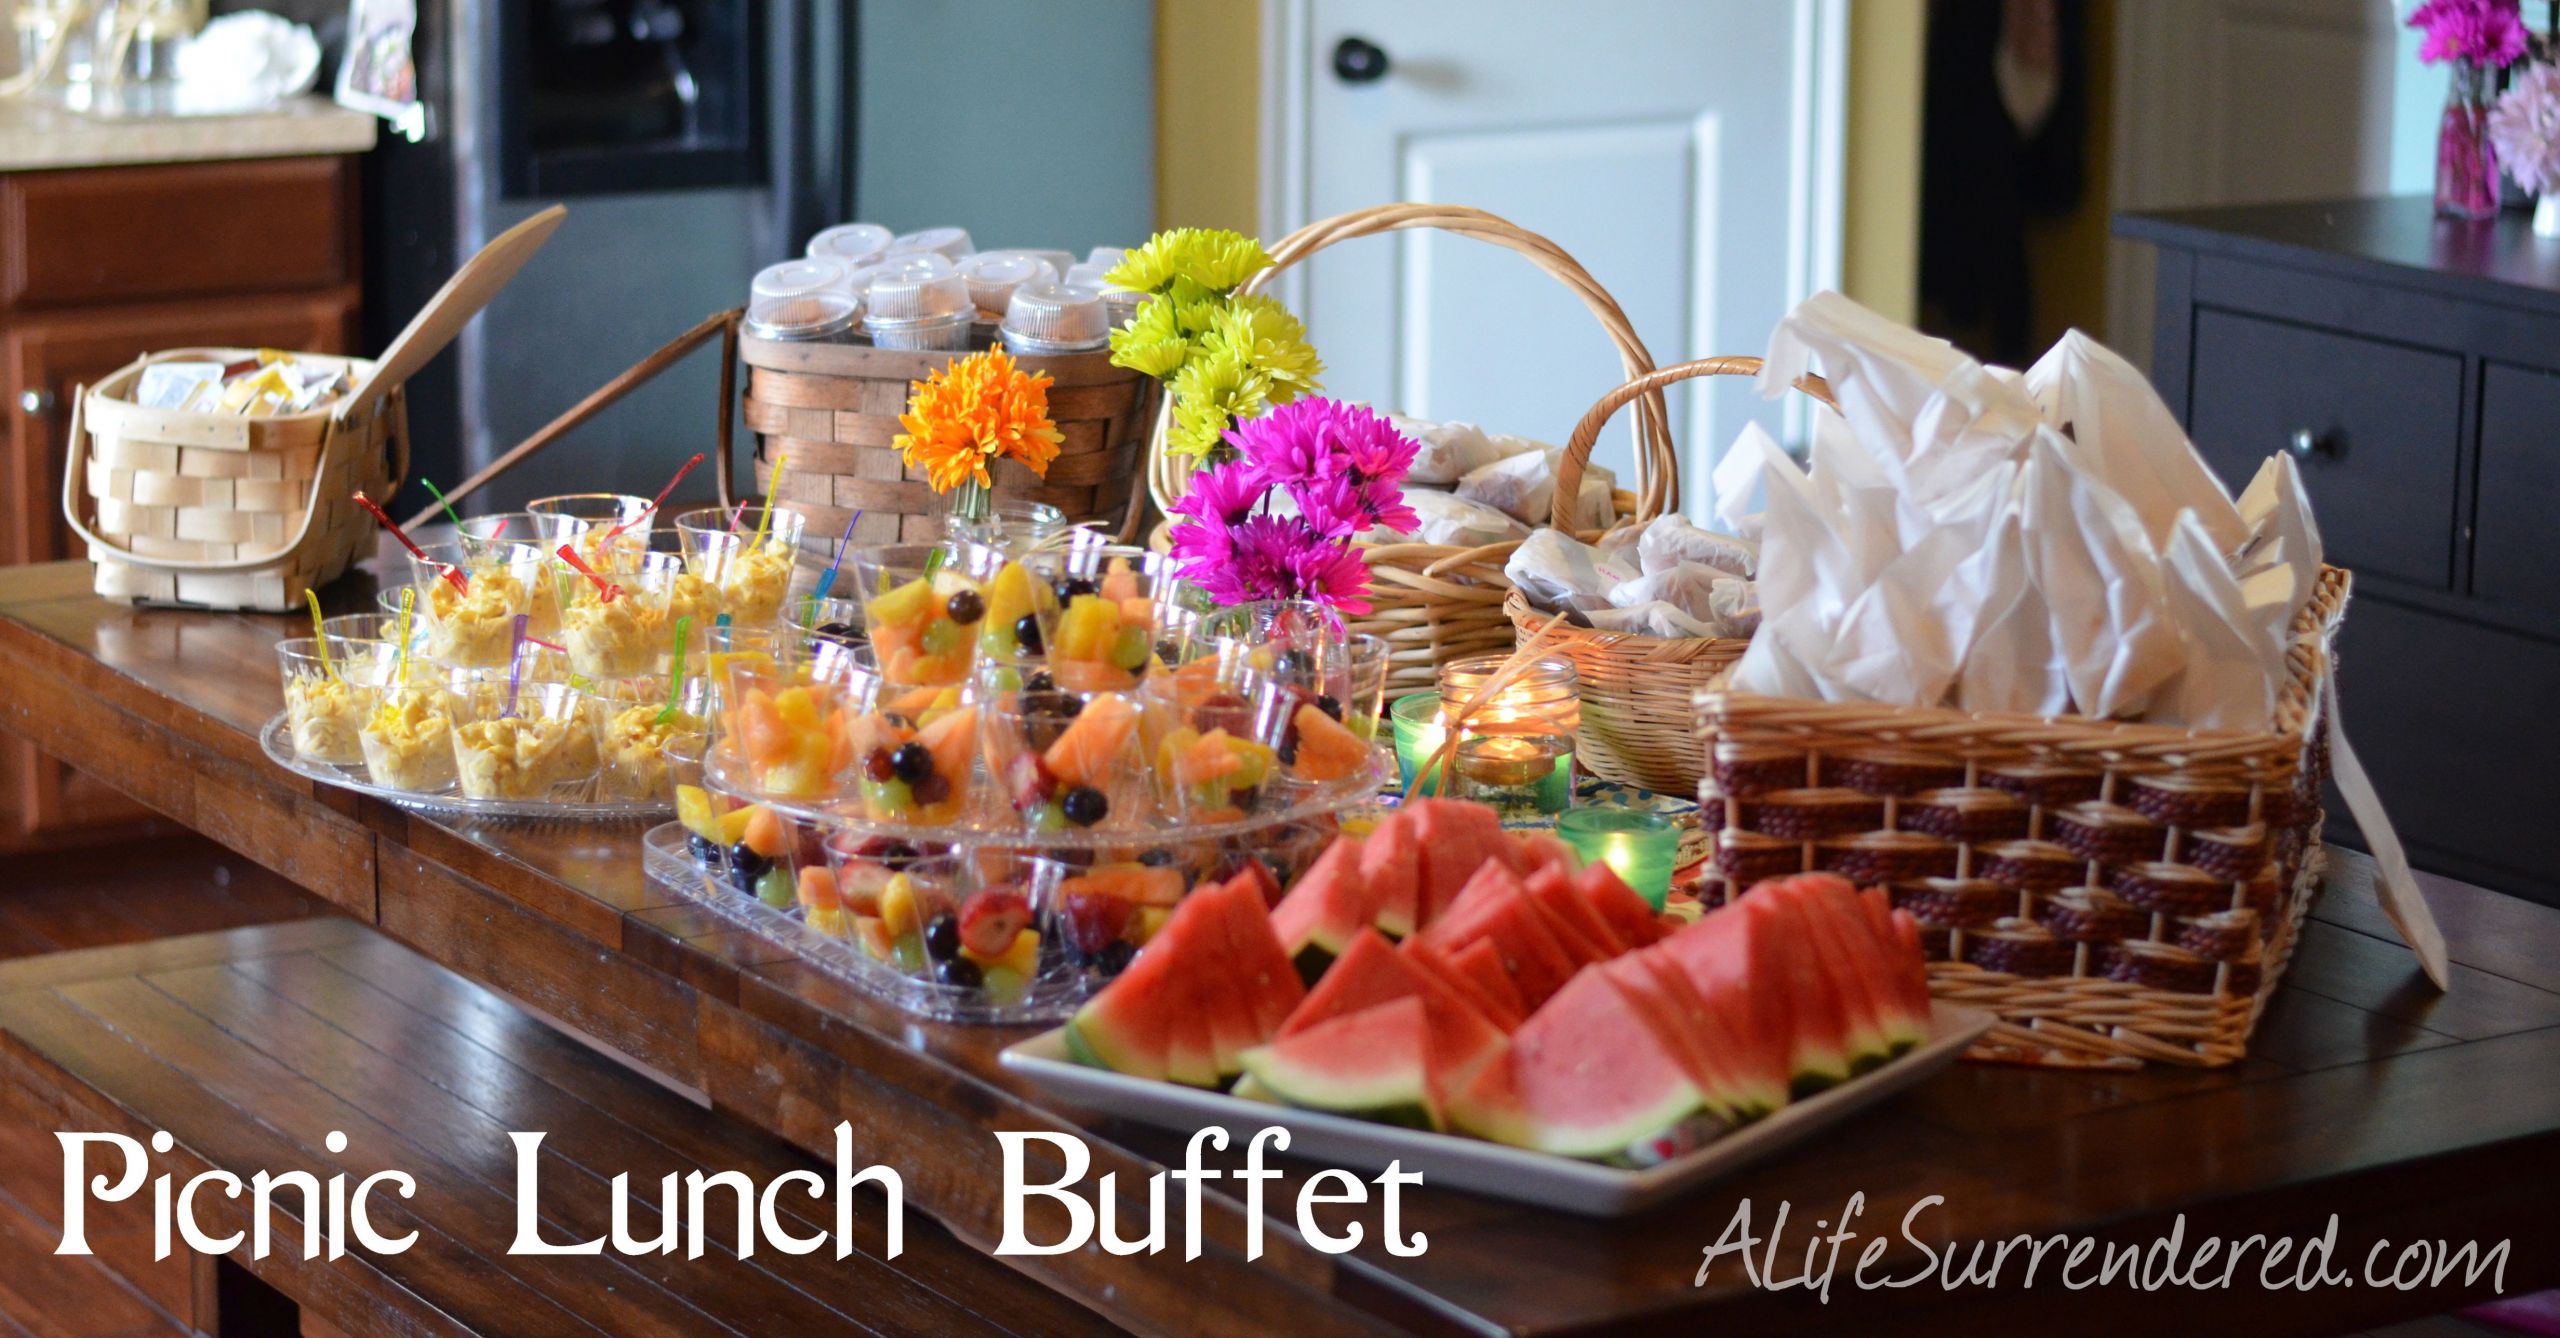 Summer Party Buffet Menu Ideas
 Picnic lunch buffet for an outdoor party the MENU